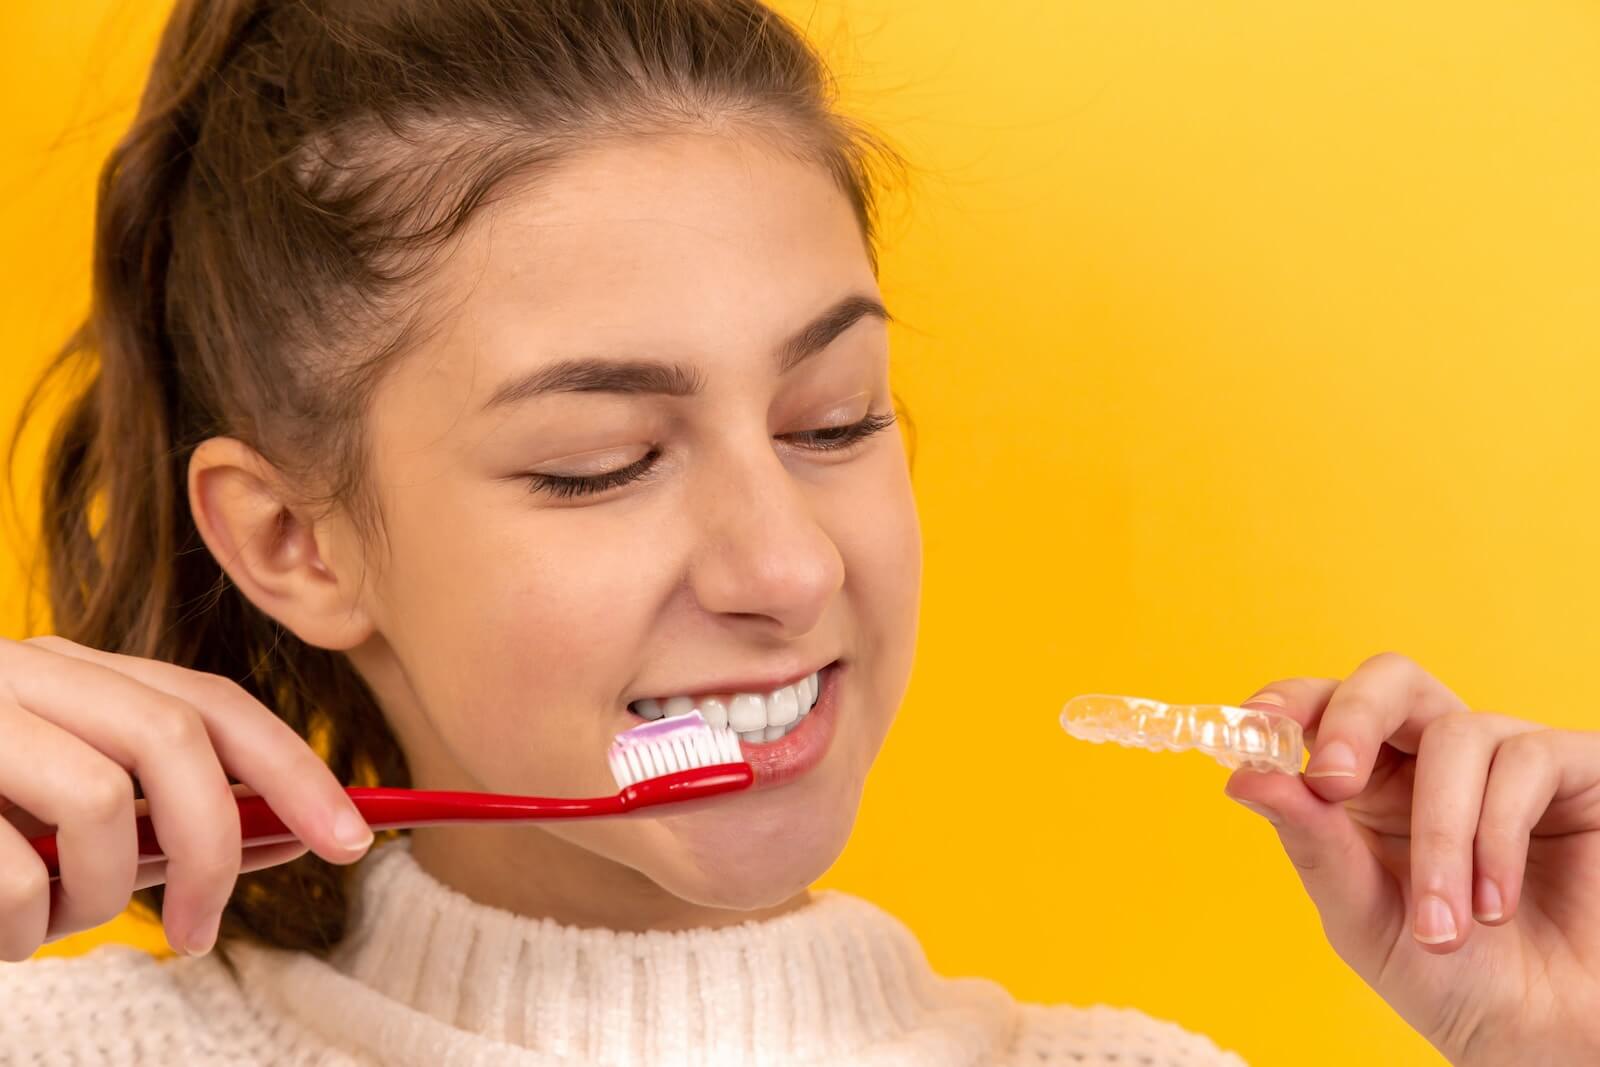 A girl brushing teeth before whitening